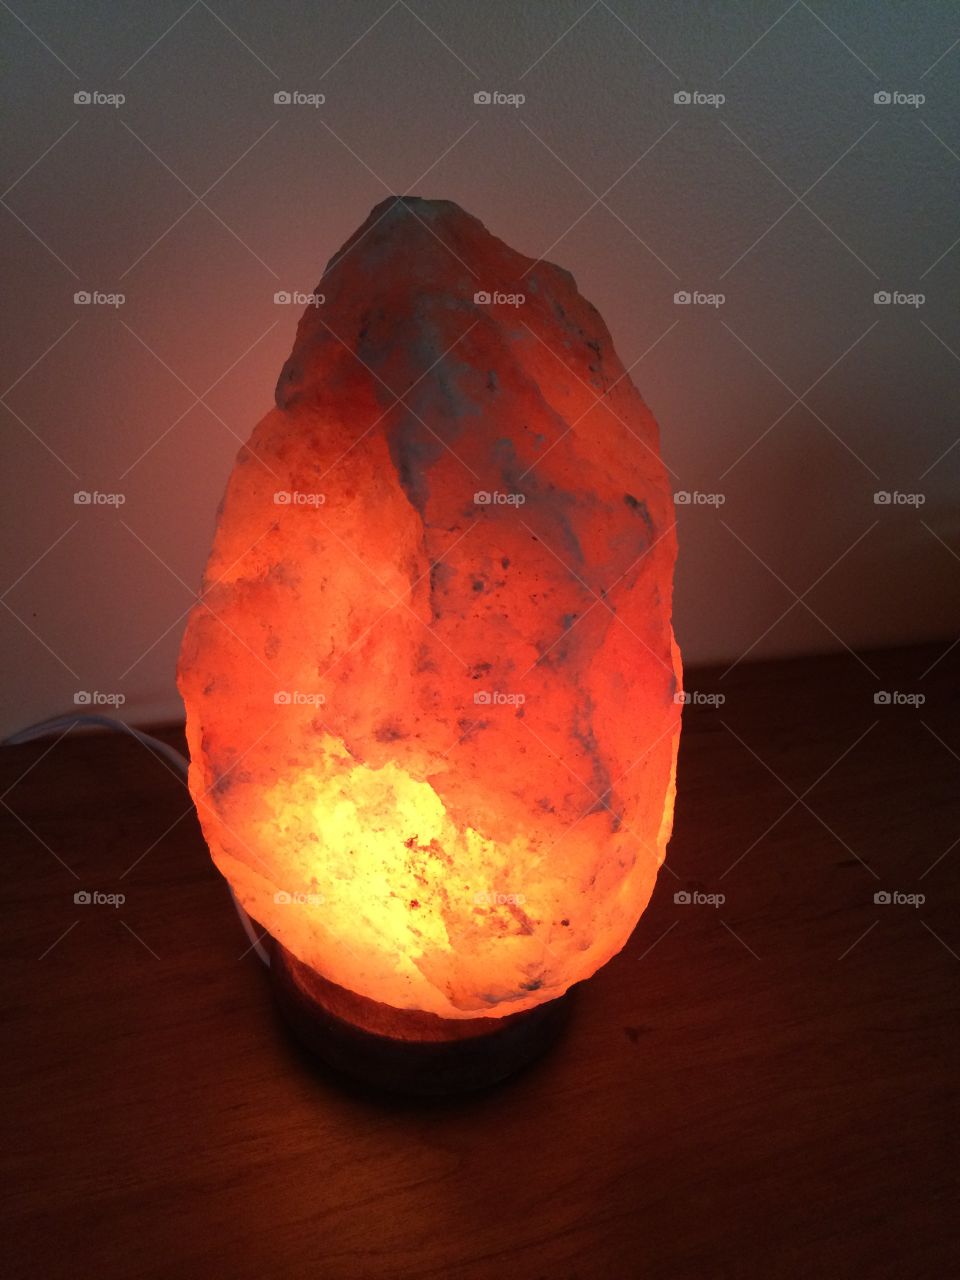 Salt lamp 